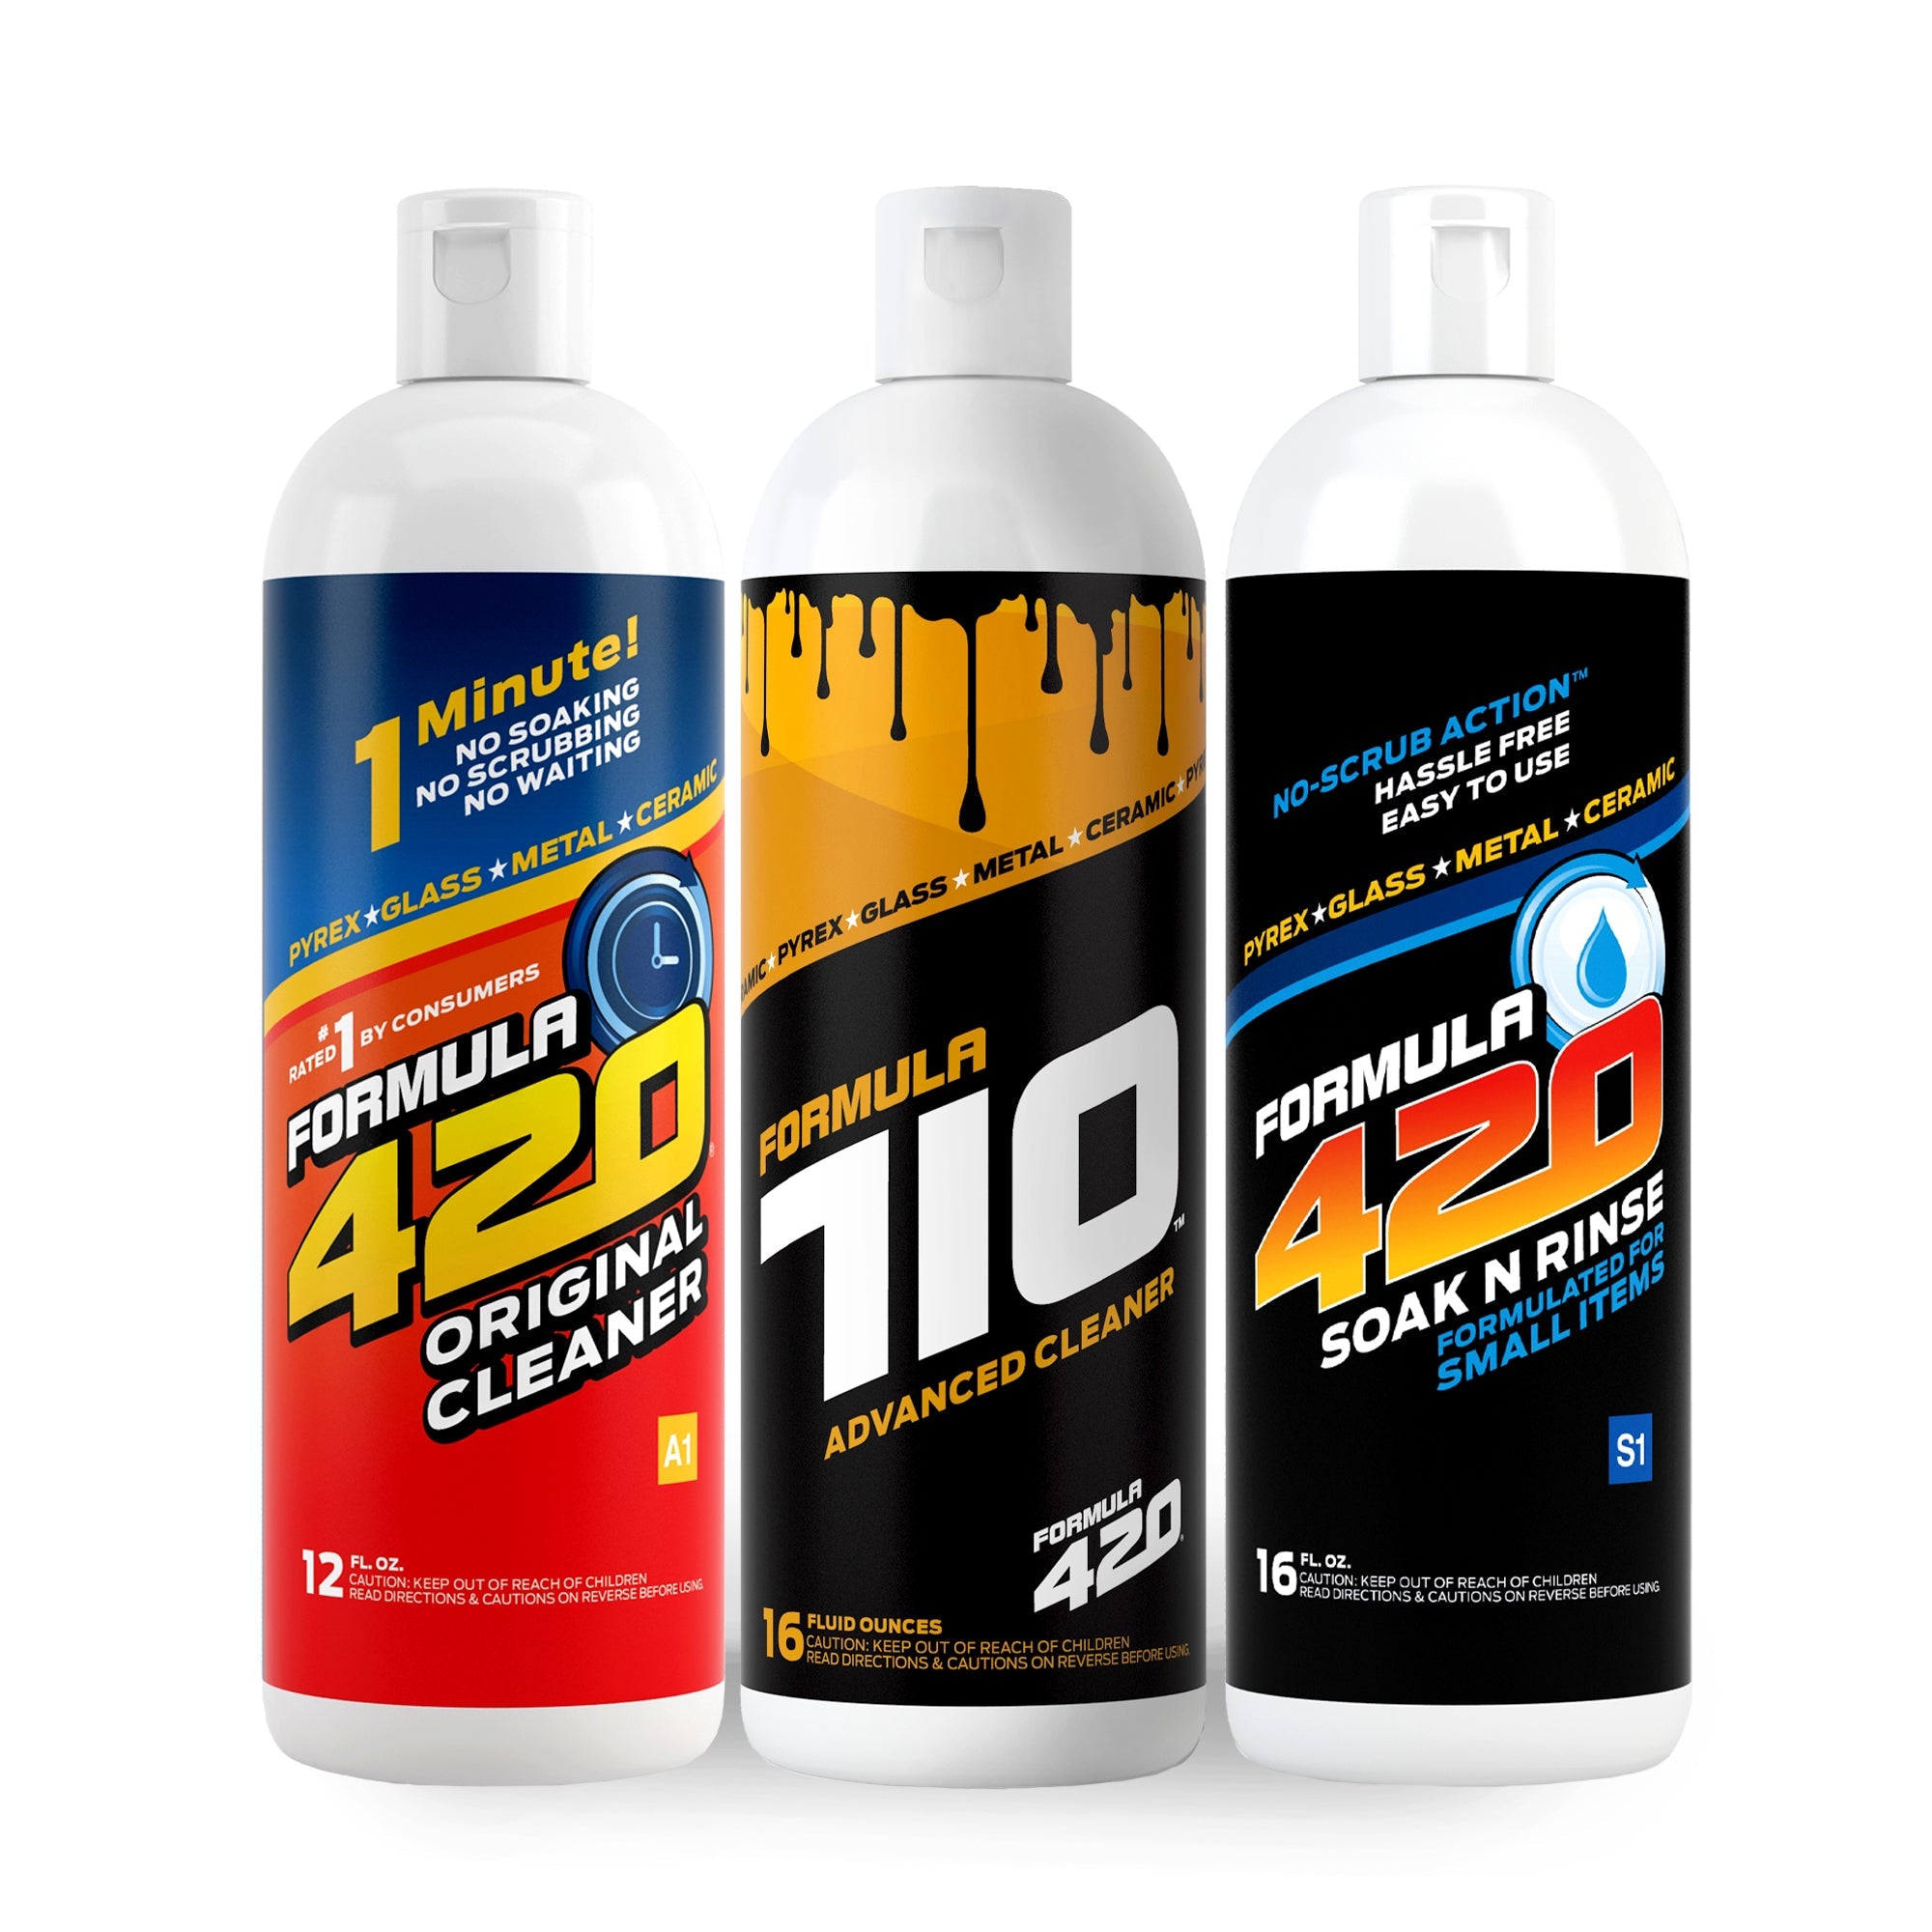 A1 - Formula 420 Original Formula - / 710 C1 Cleaner Cleaner Advanced